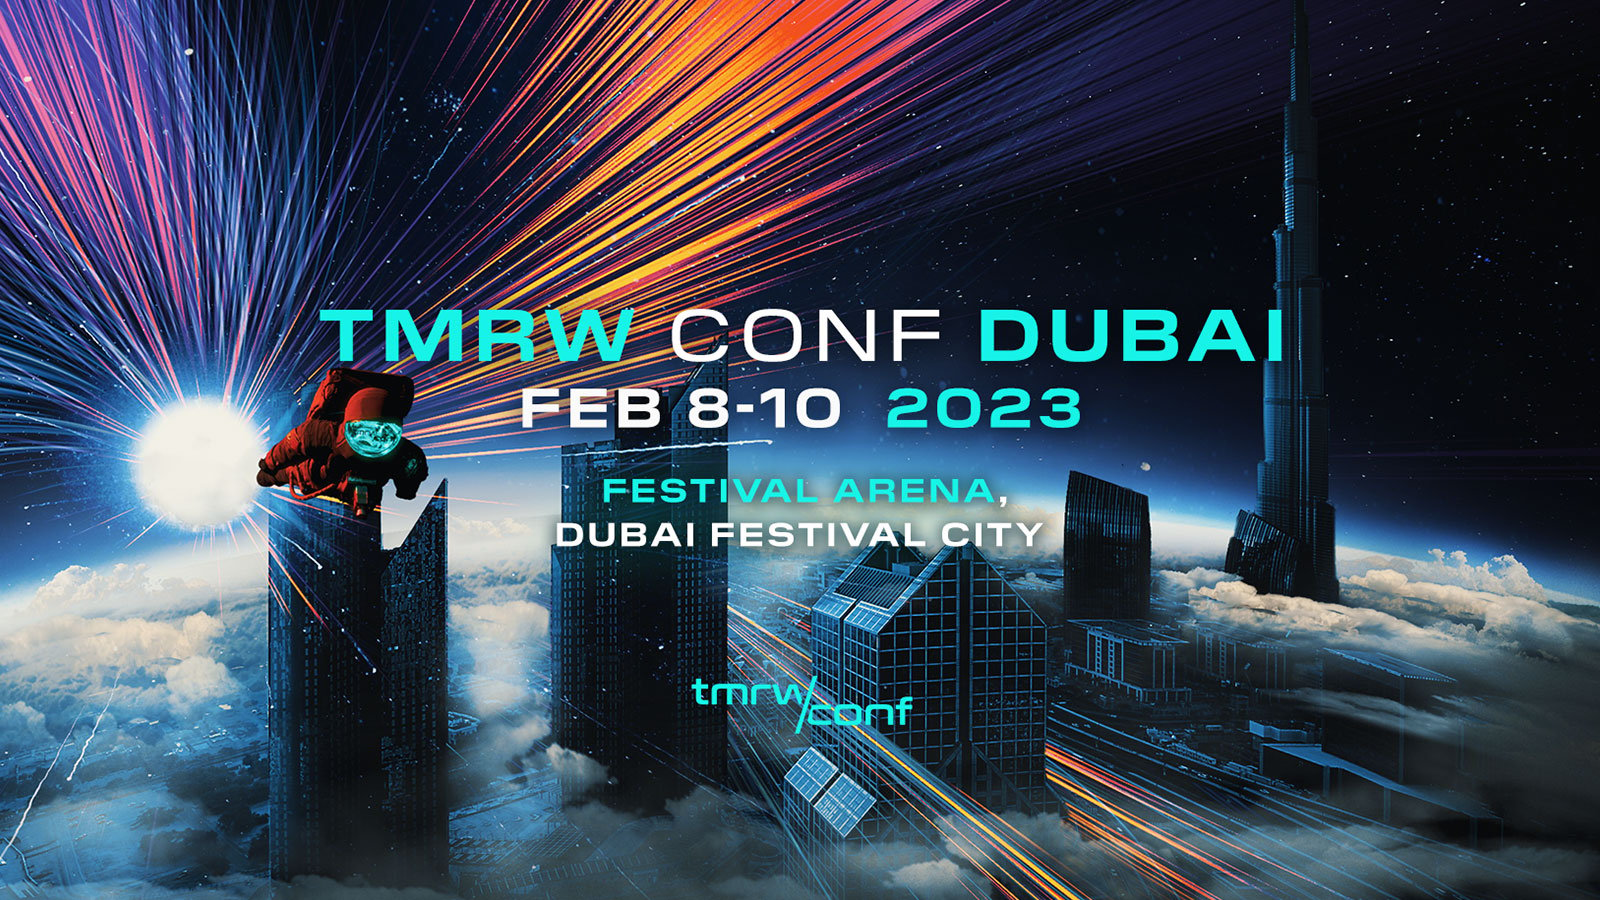 TMRW Dubai: Ready for the New World - Beyond Financial Freedom?